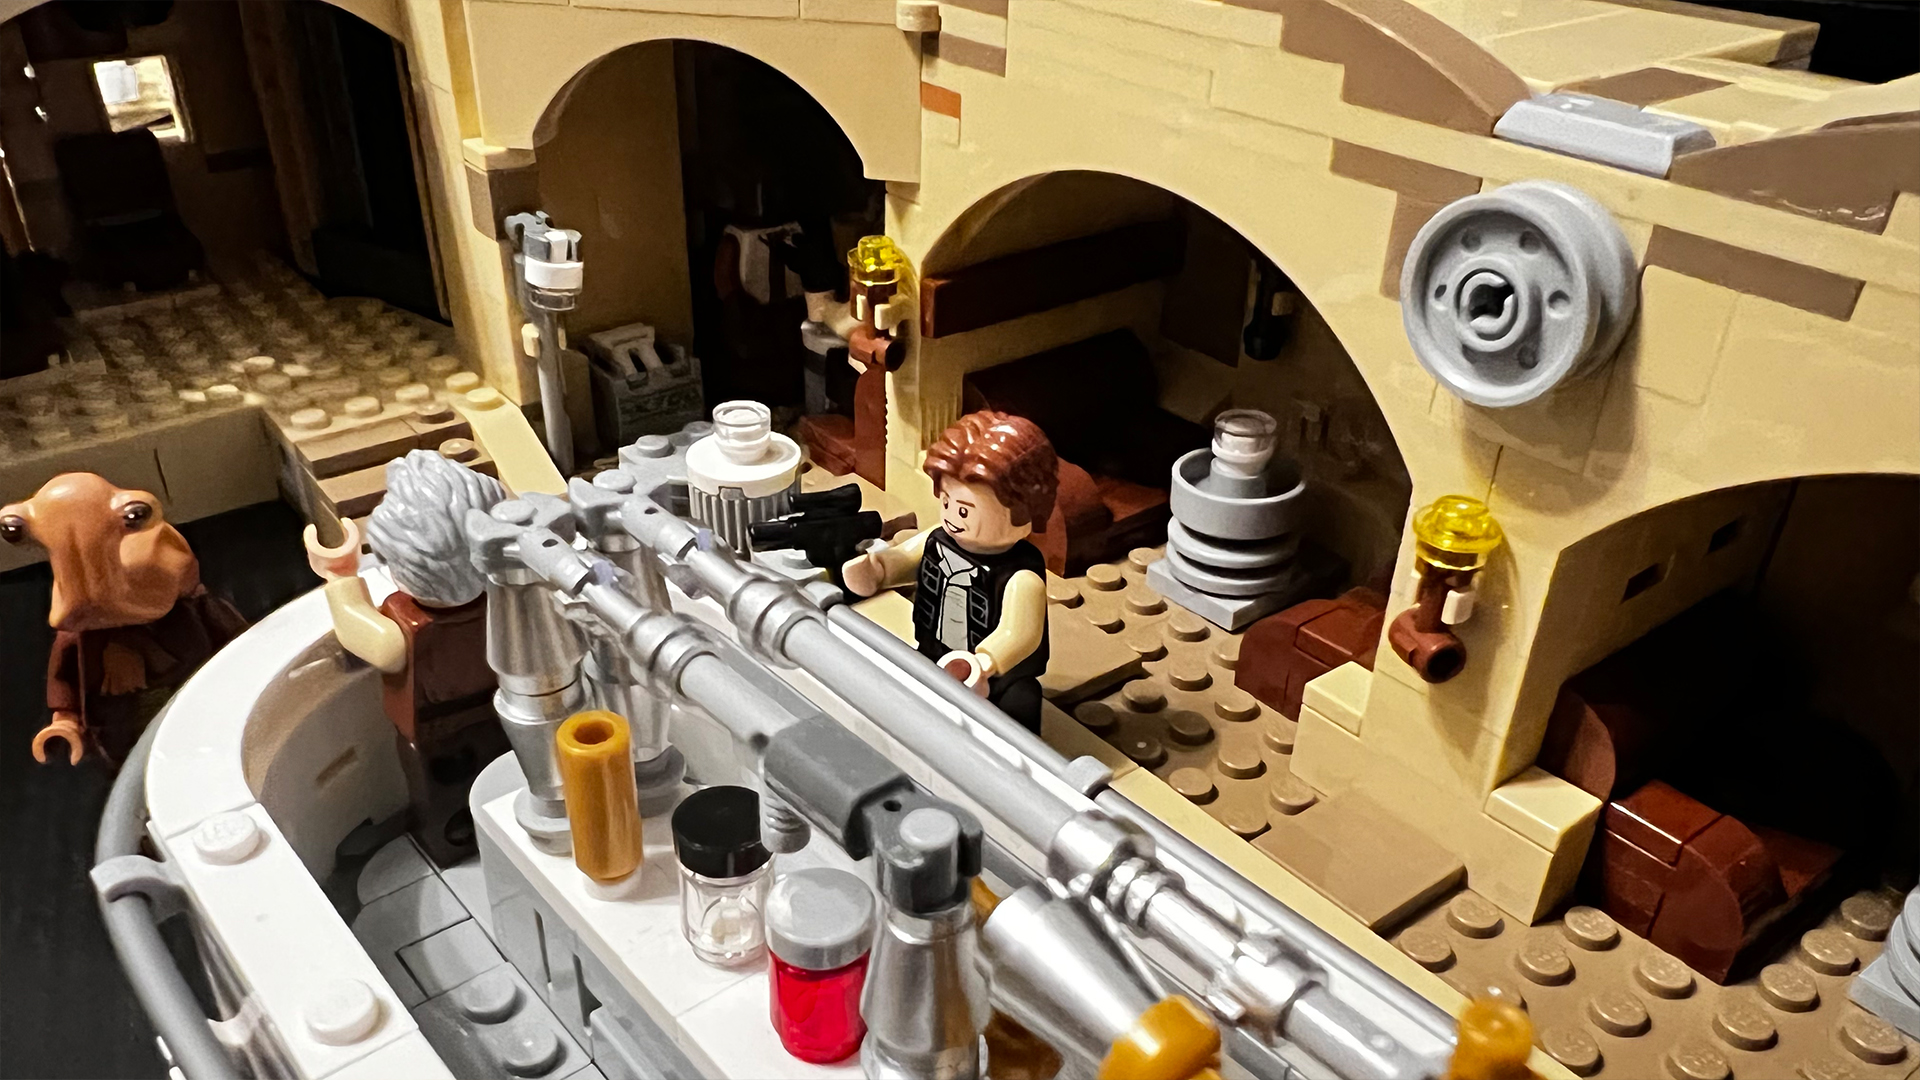 Lego Star Wars Mos Eisley Cantina_behind the bar_Jordan Middler